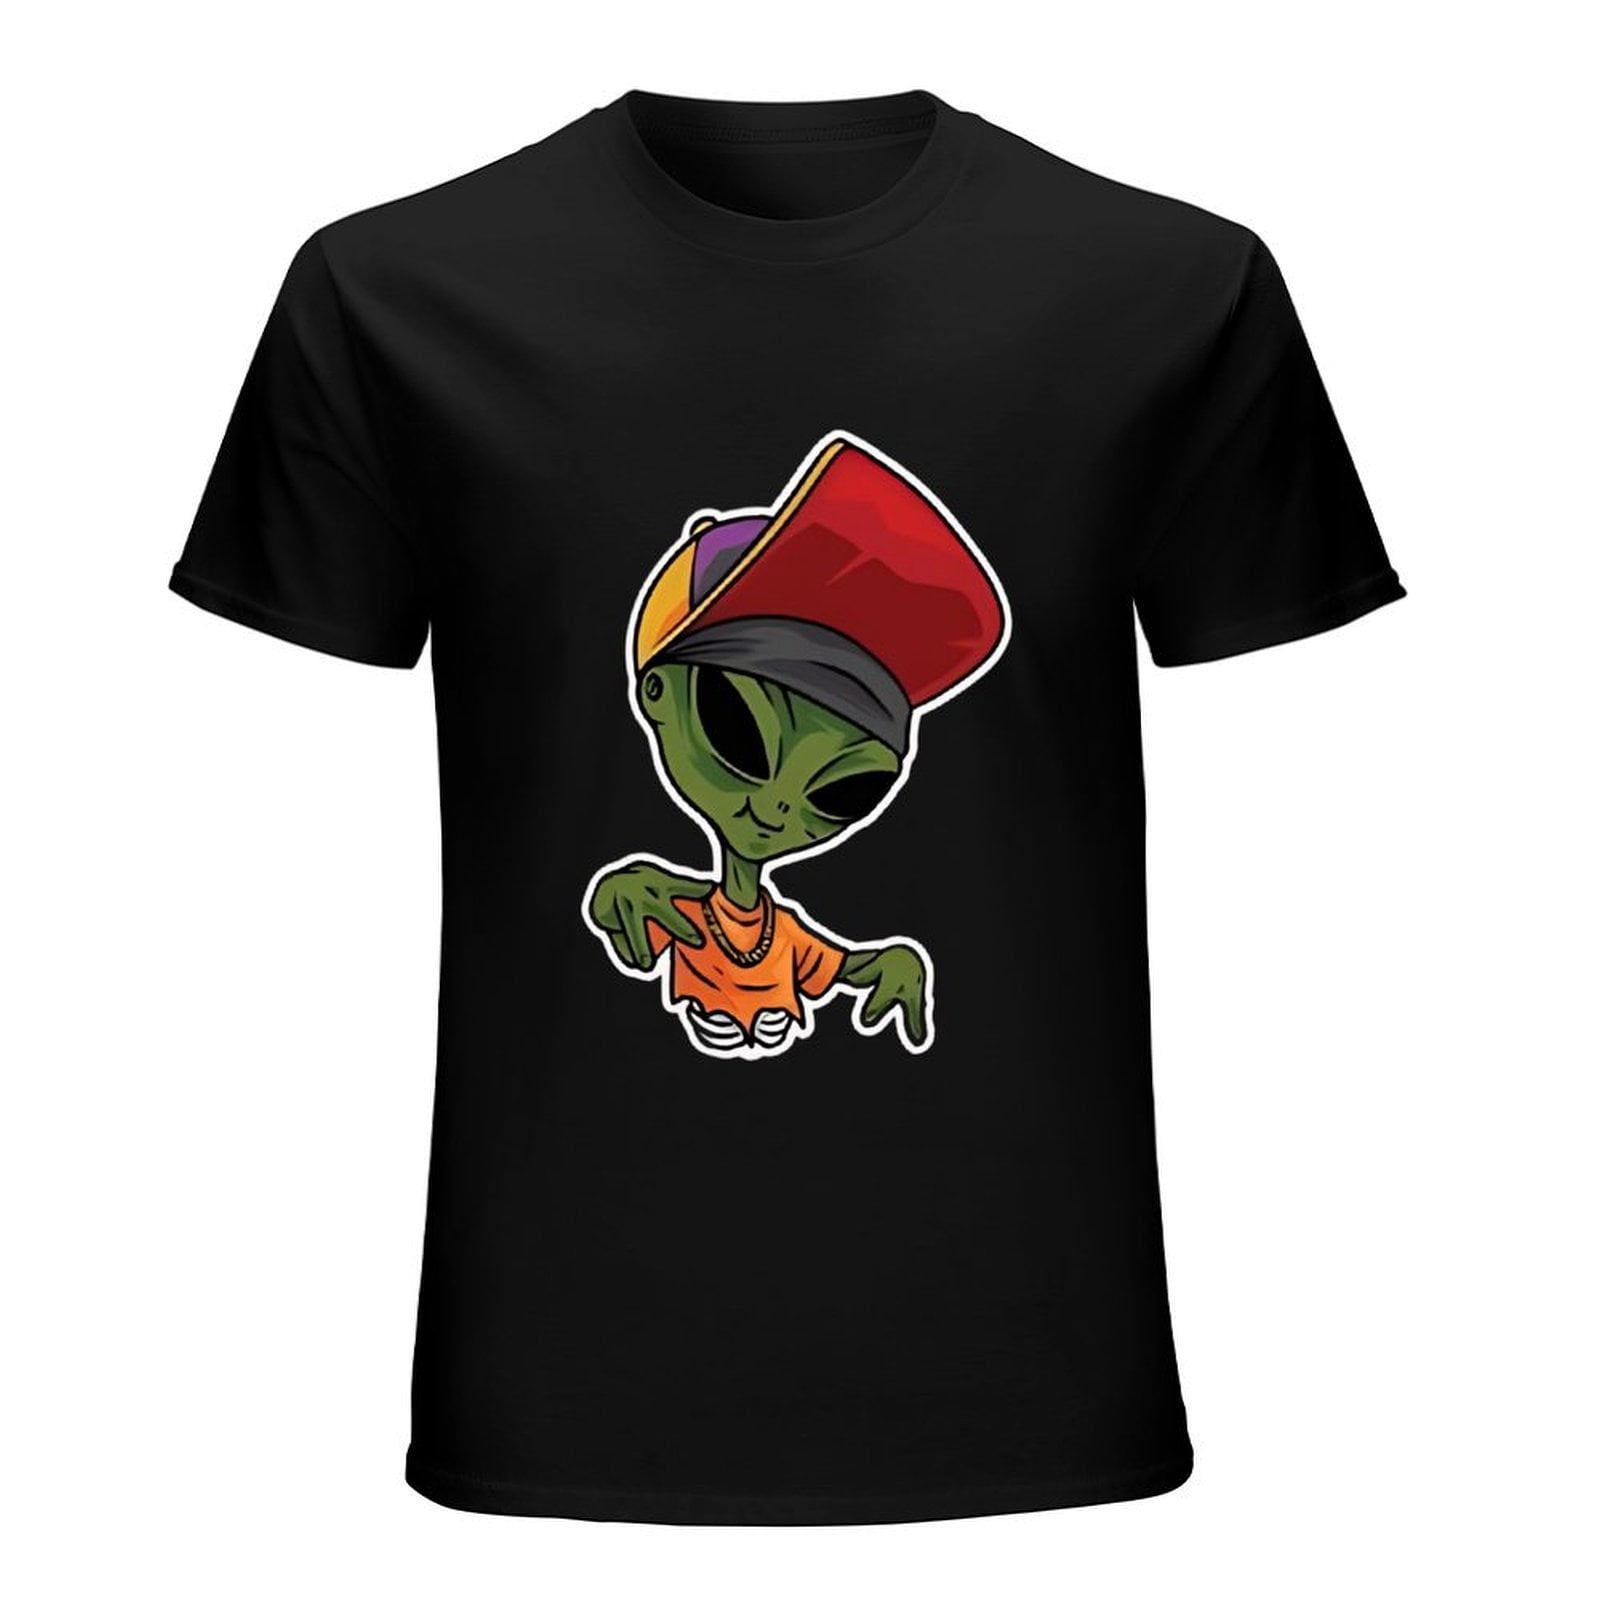 Alien Rapper T-Shirt Men's Cool Hip Hop Music Fashion Tee - Walmart.com